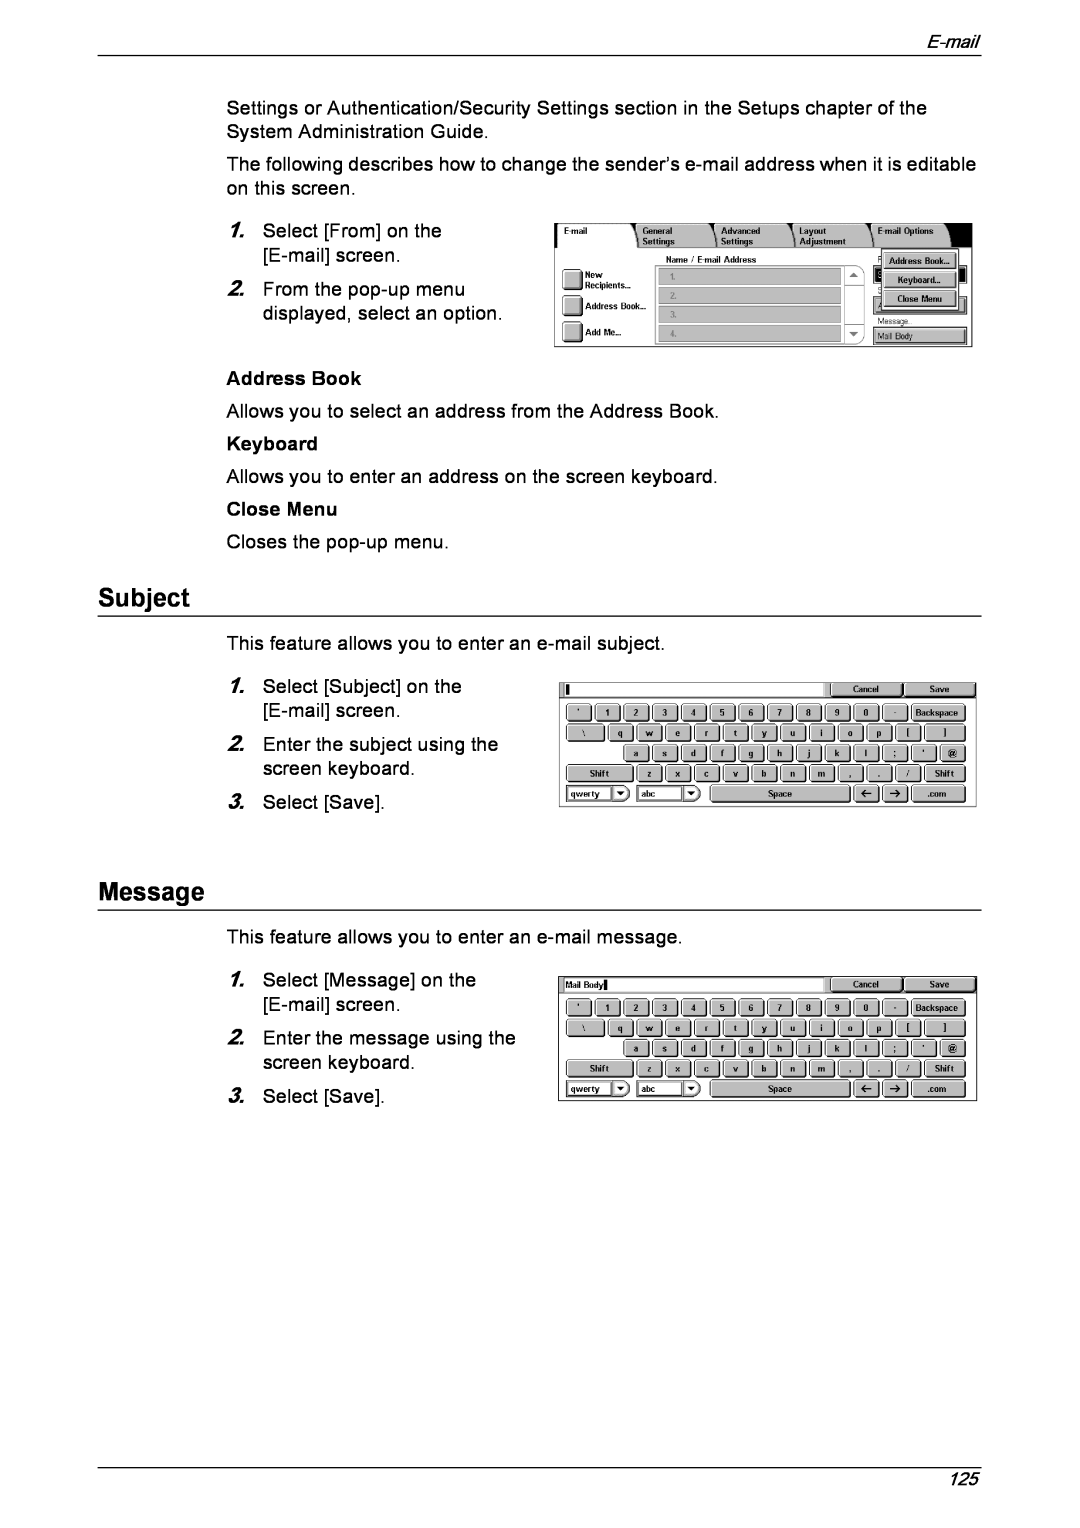 Xerox 5230 manual Address Book, Keyboard, Close Menu, Subject, Message 